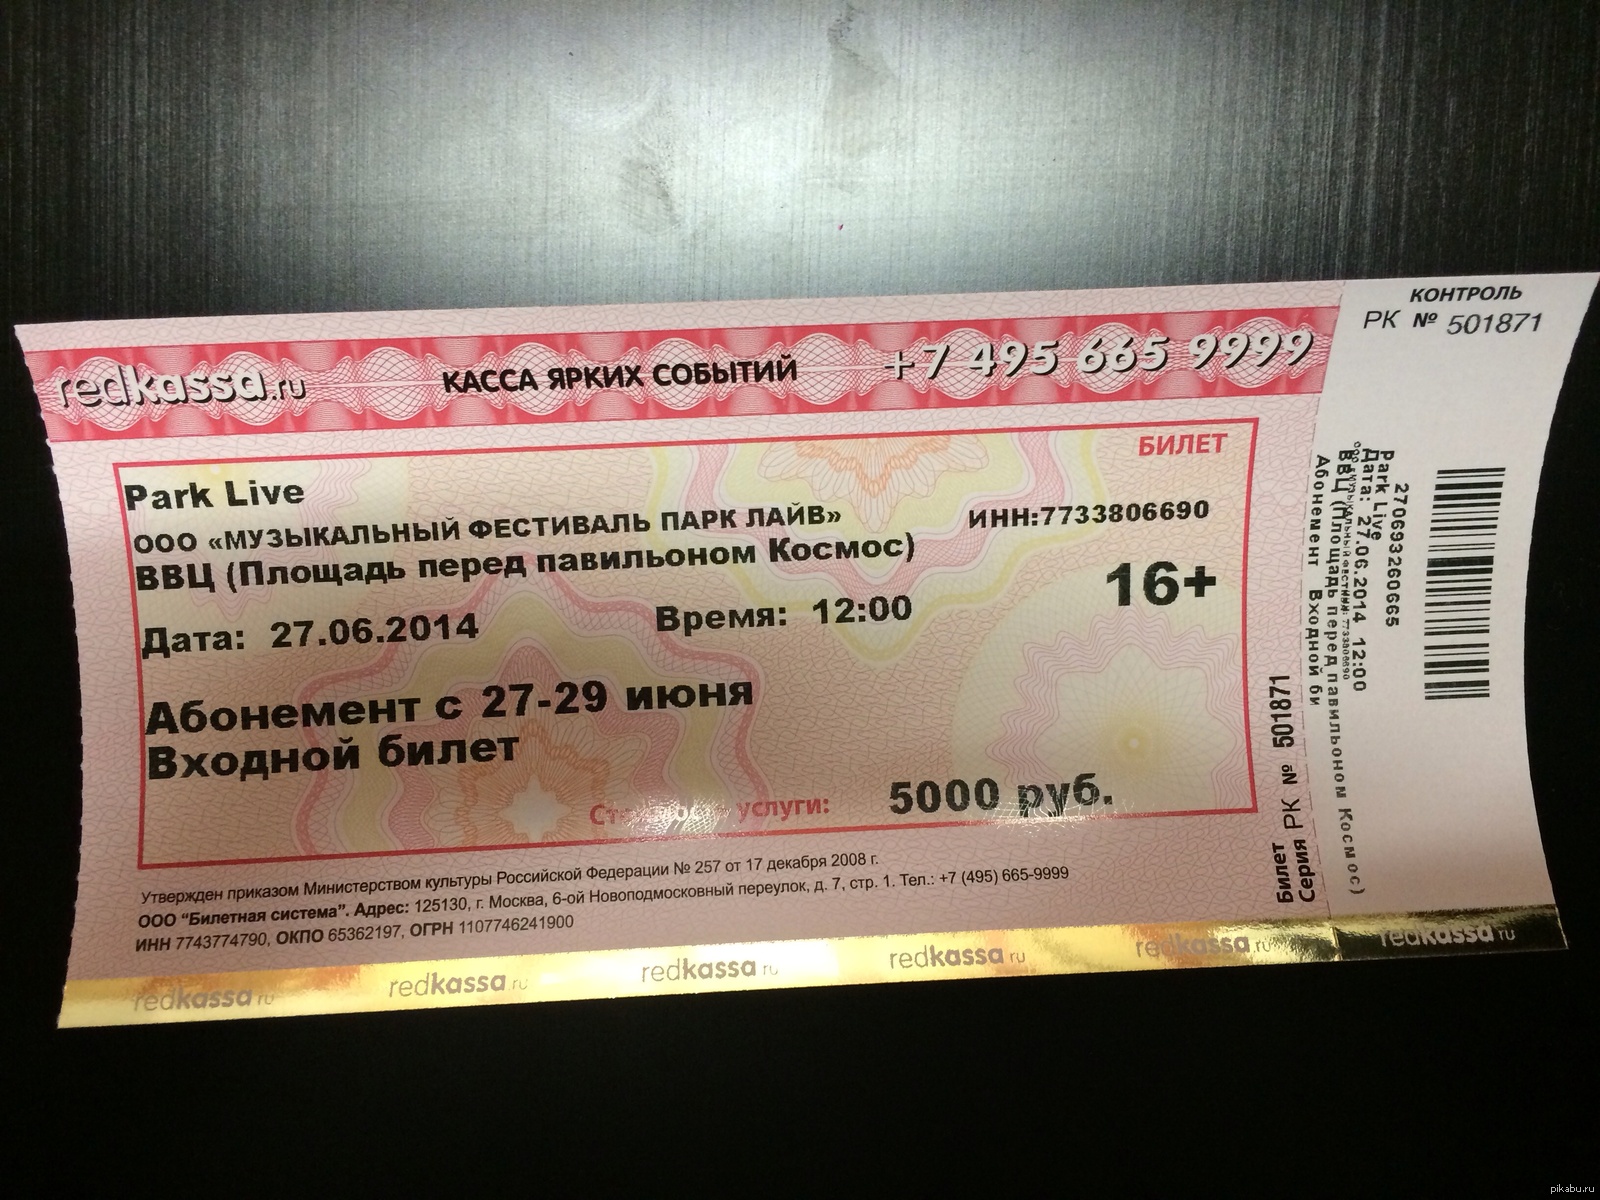 Фото билета на концерт. Билет на концерт. Билеты на концерт в подарок. Билет на выступление. Электронный билет REDKASSA.